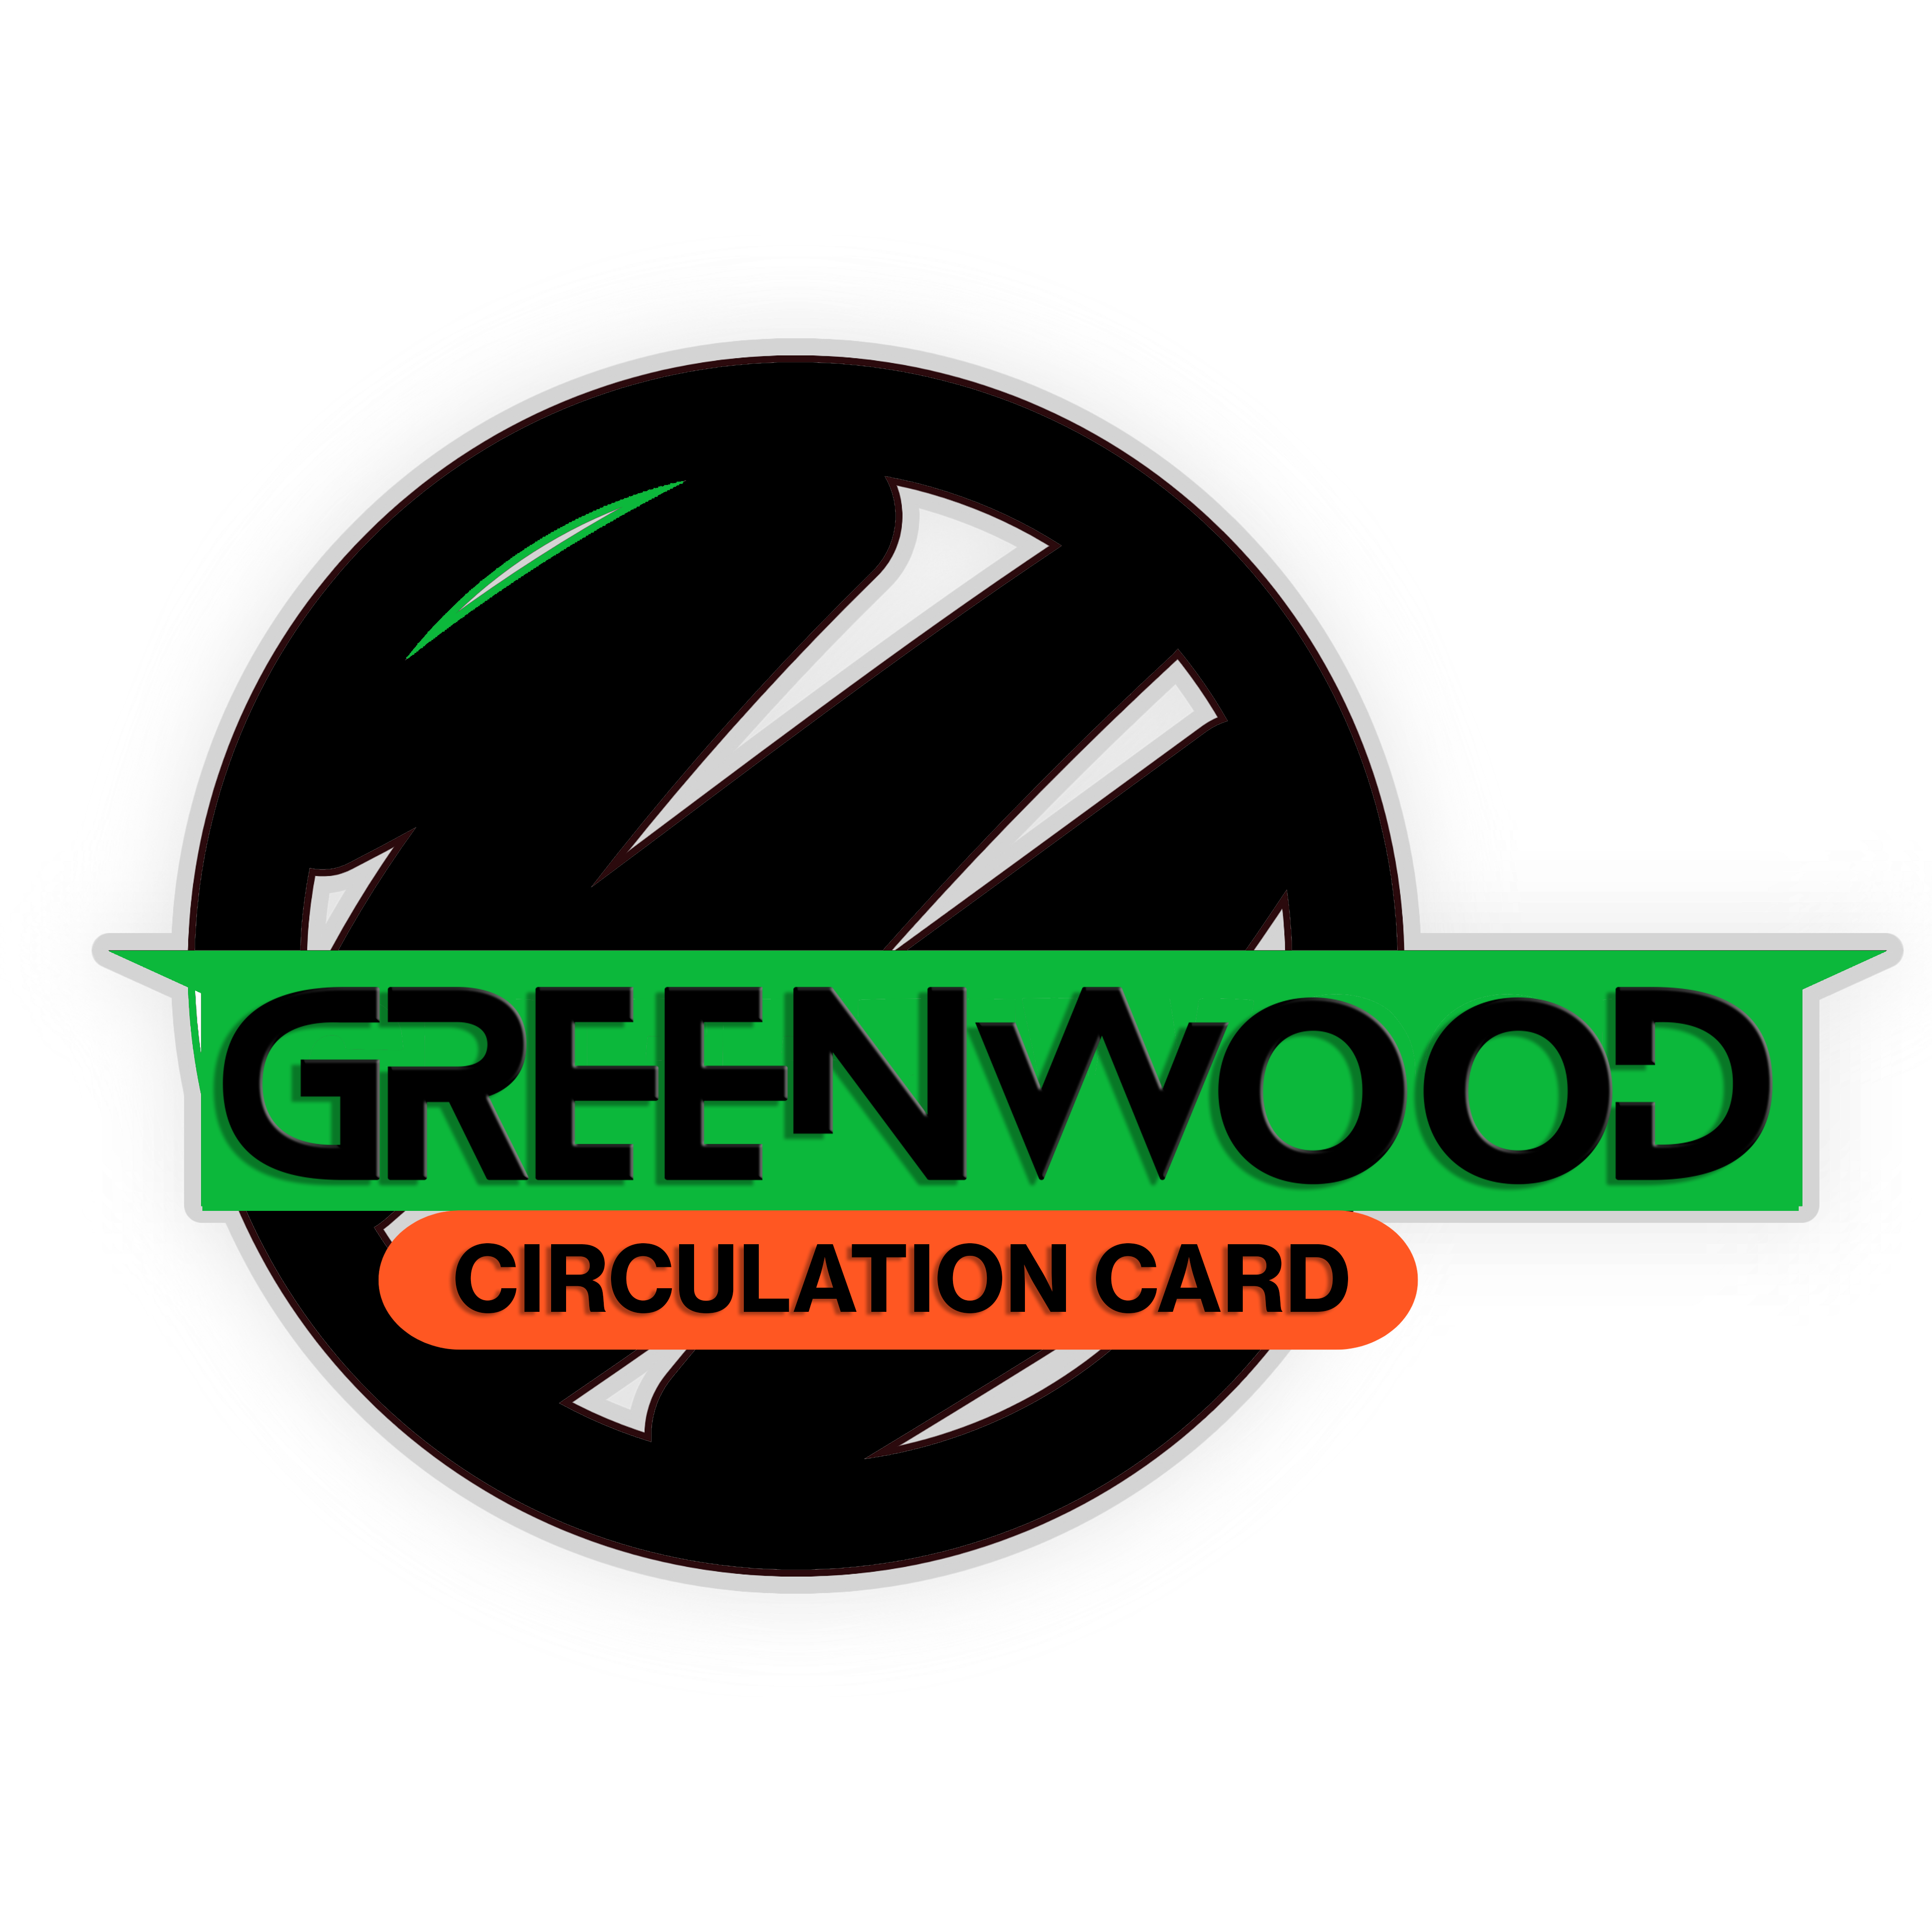 The Greenwood Circulation Card logo